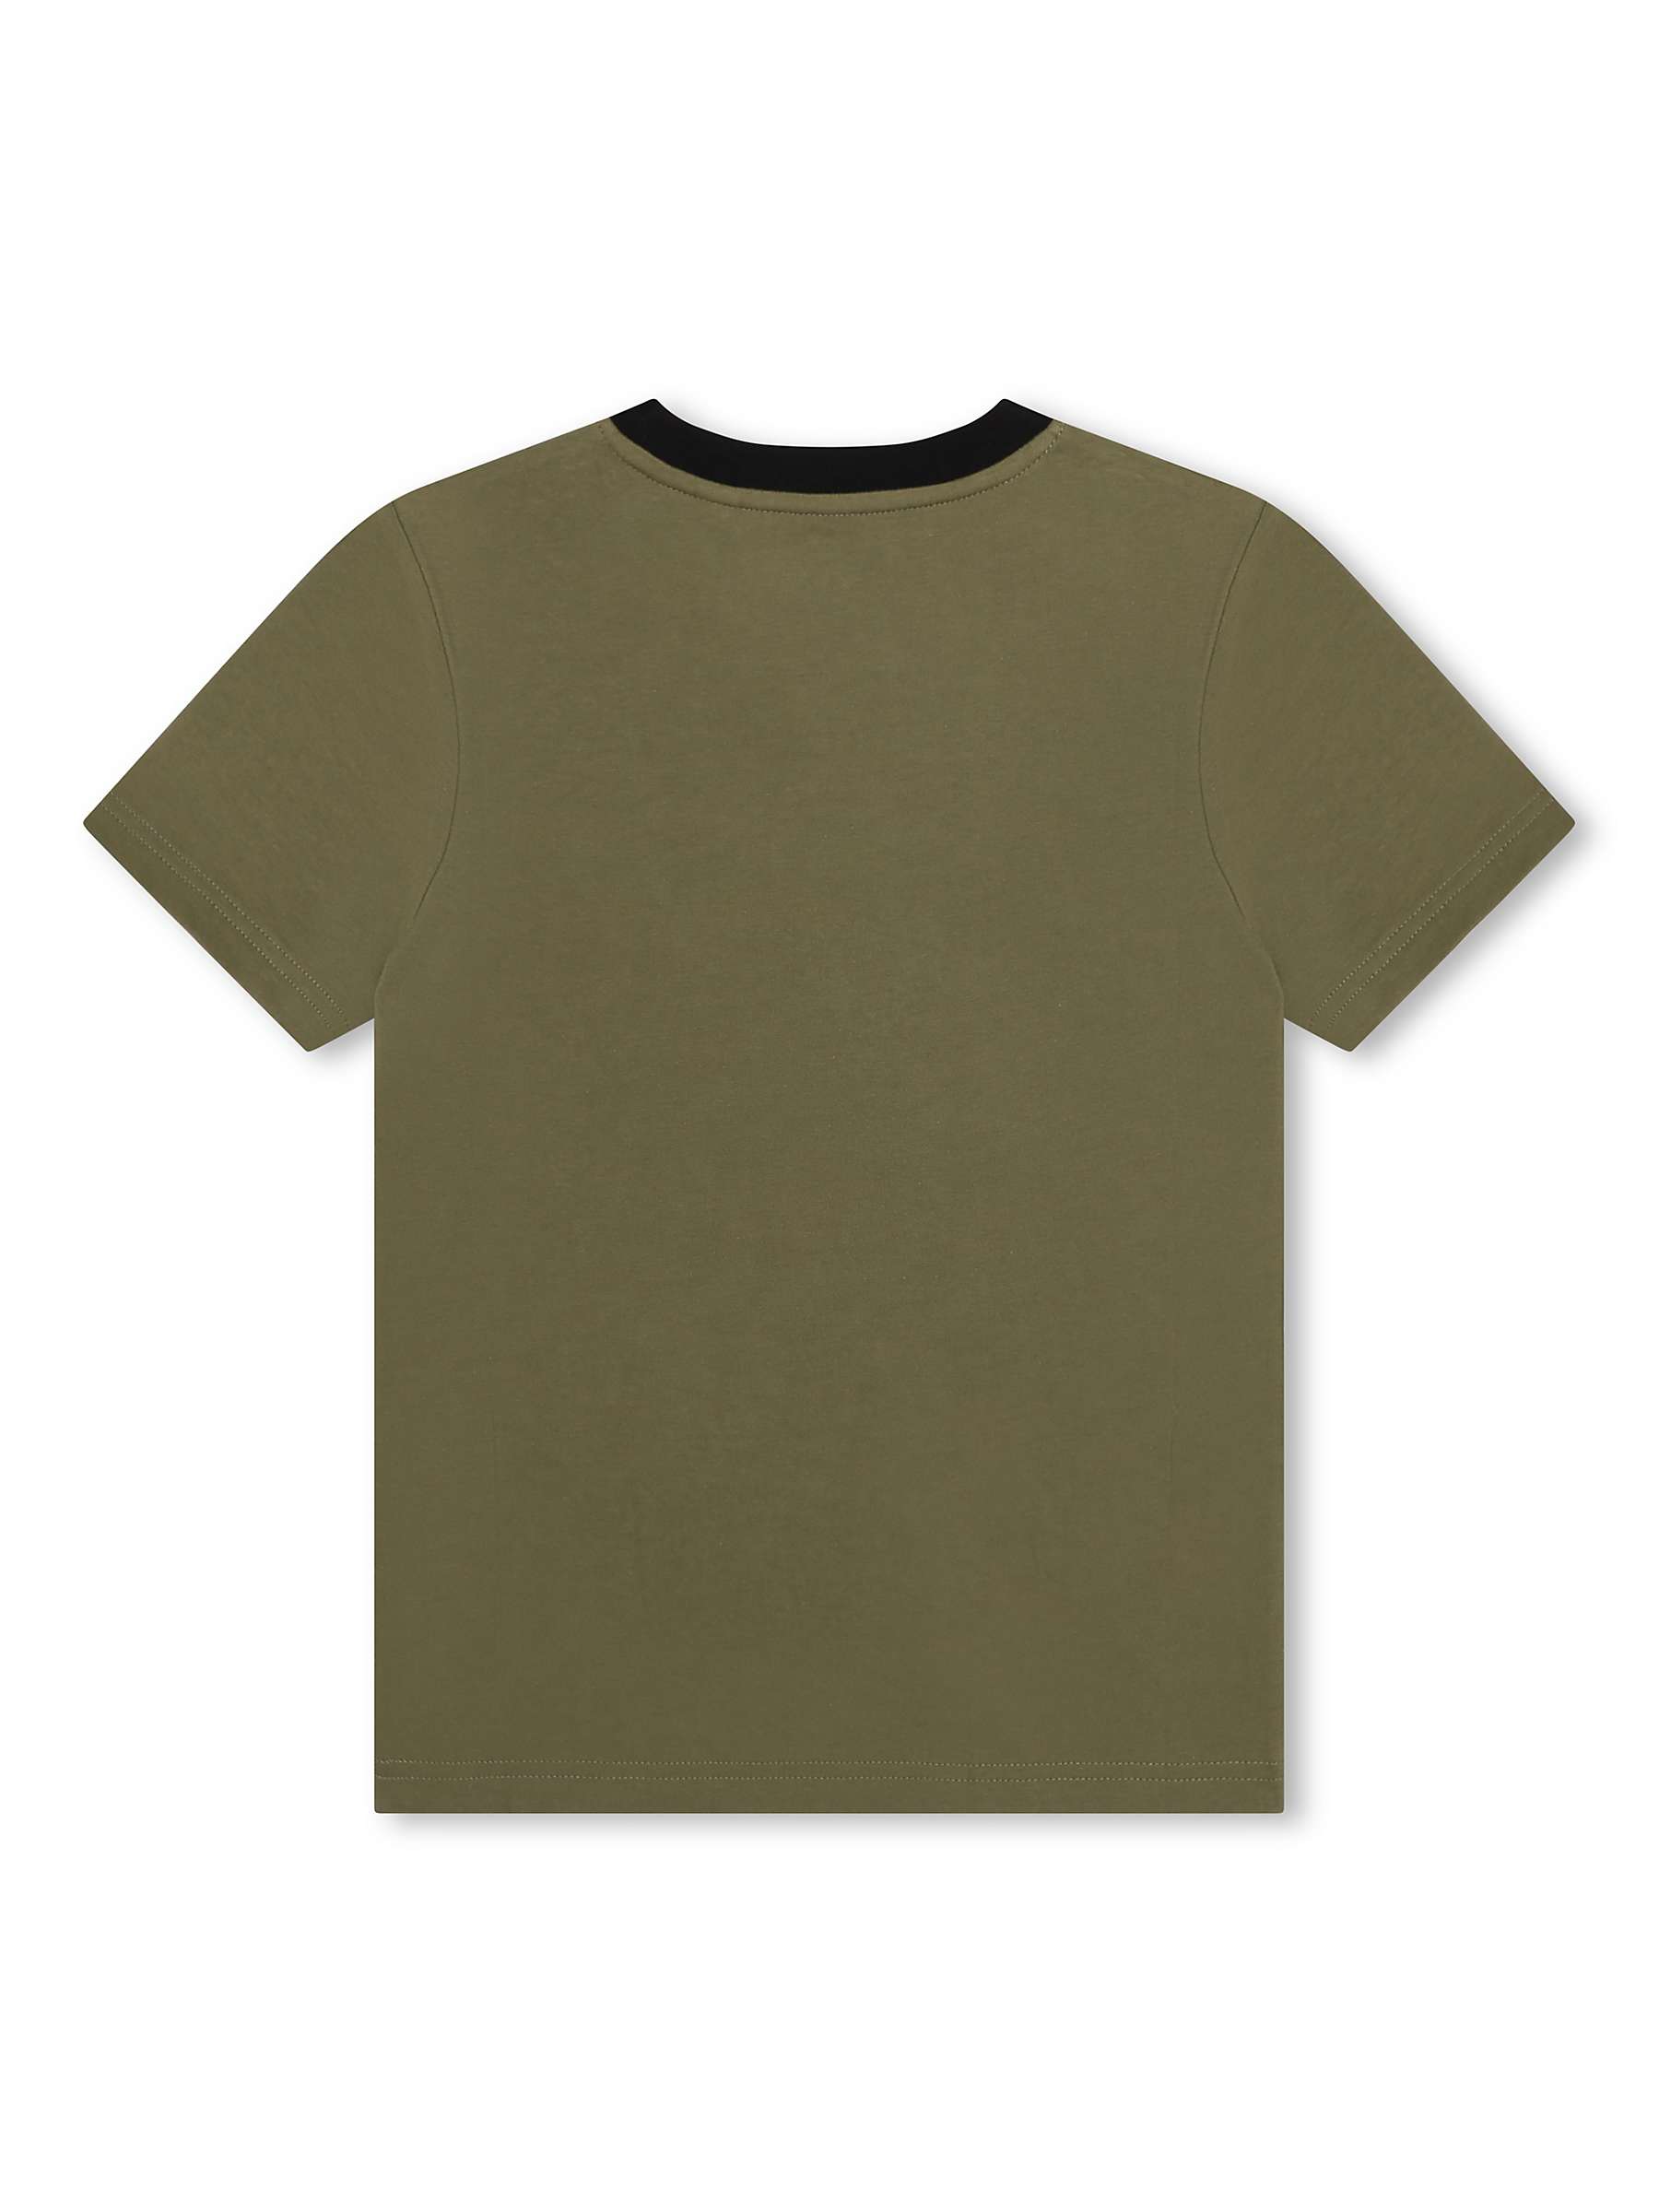 Buy Timberland Kids' Built For The Bold Logo T-Shirt, Green Online at johnlewis.com